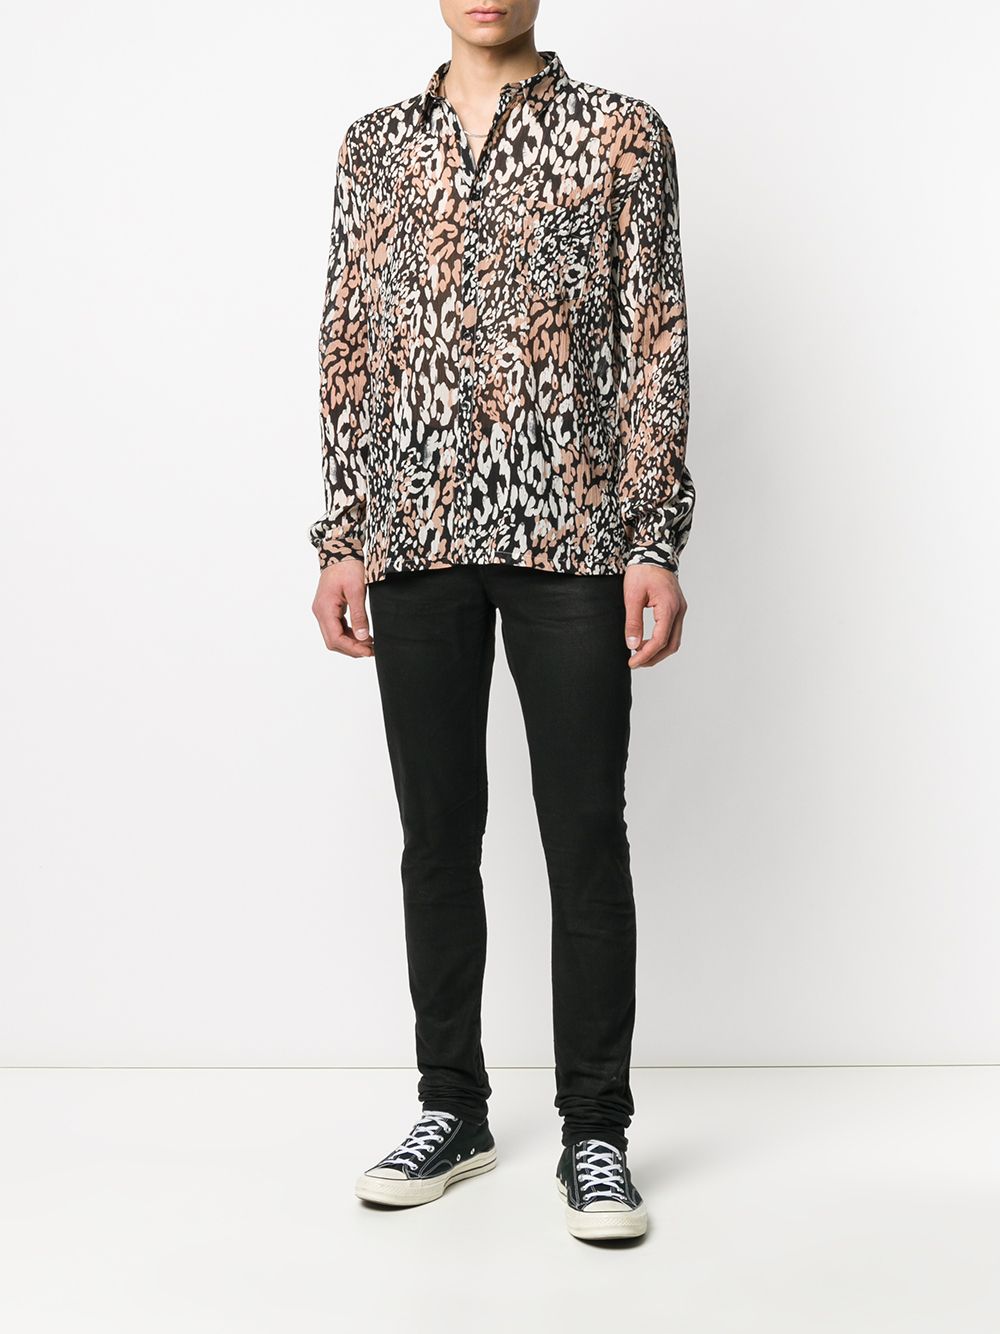 фото Saint laurent рубашка с леопардовым принтом